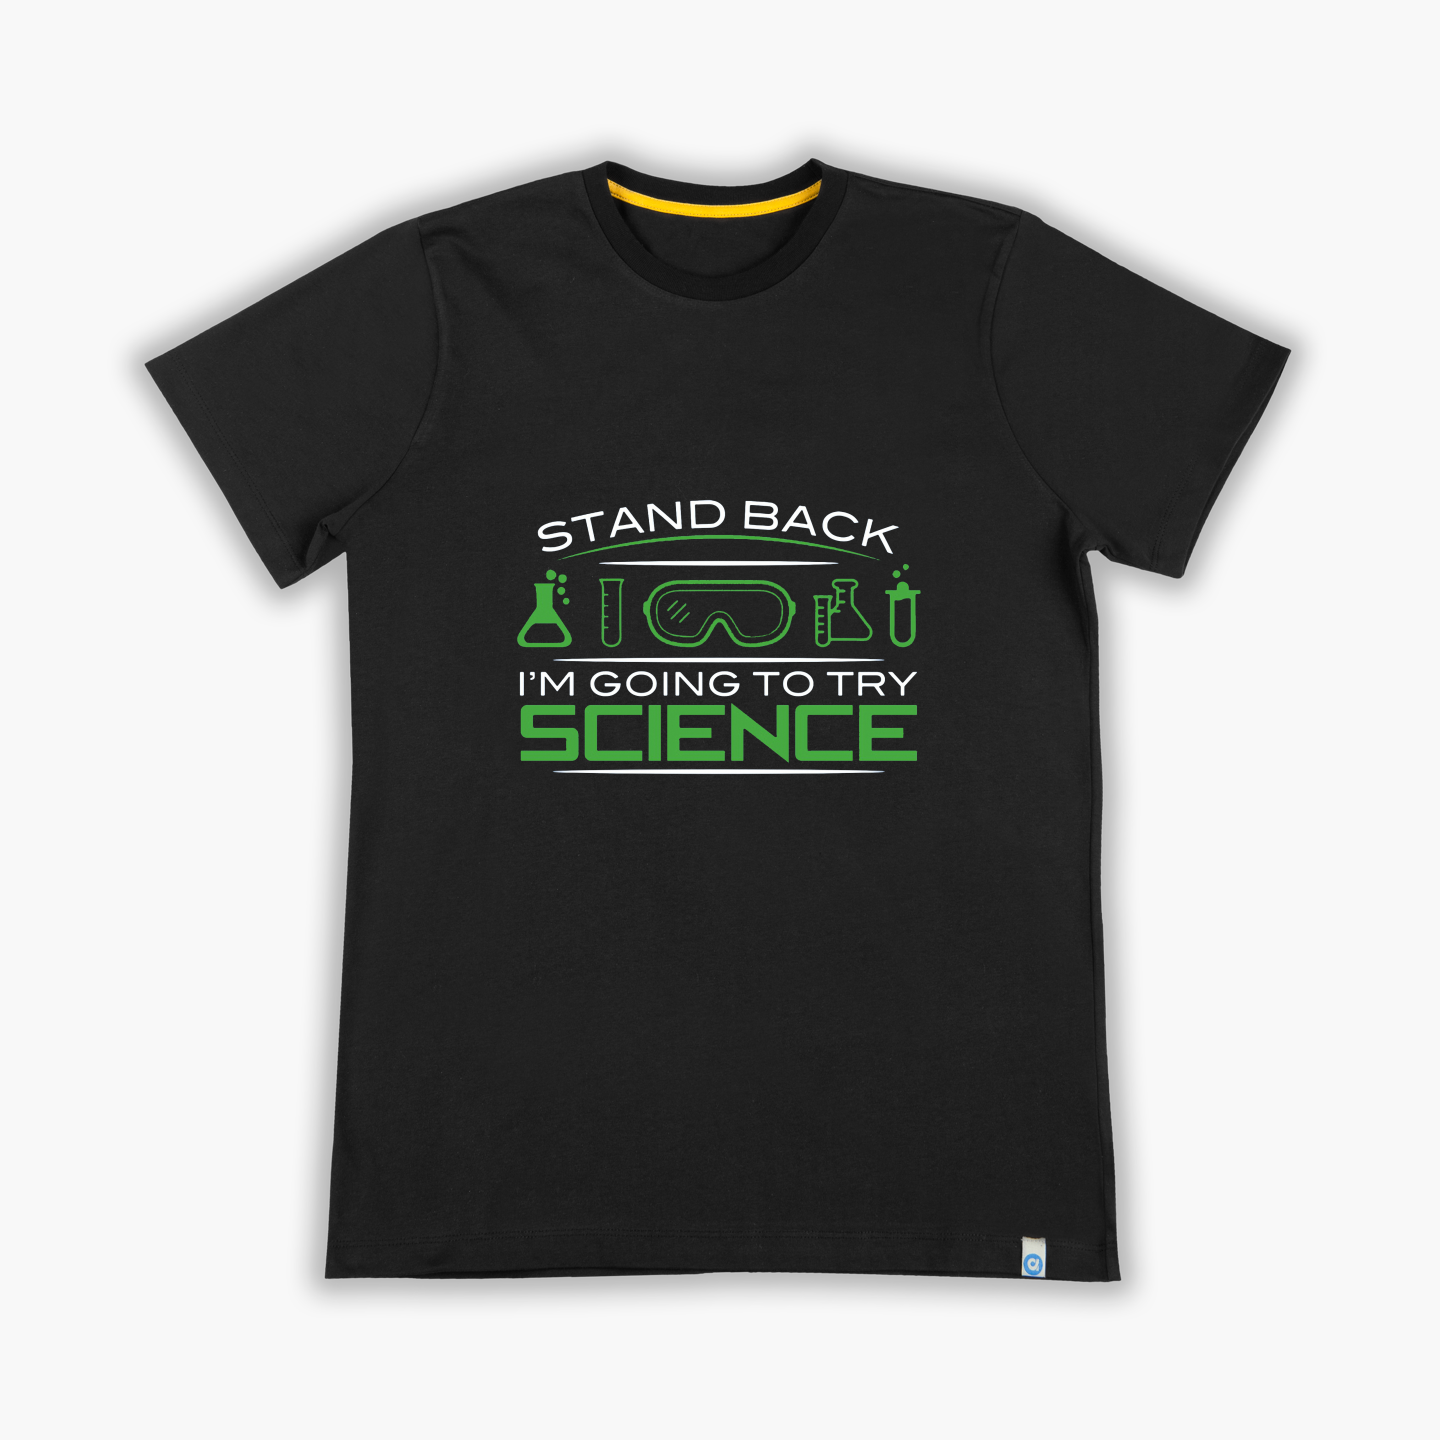 Science - Tişört